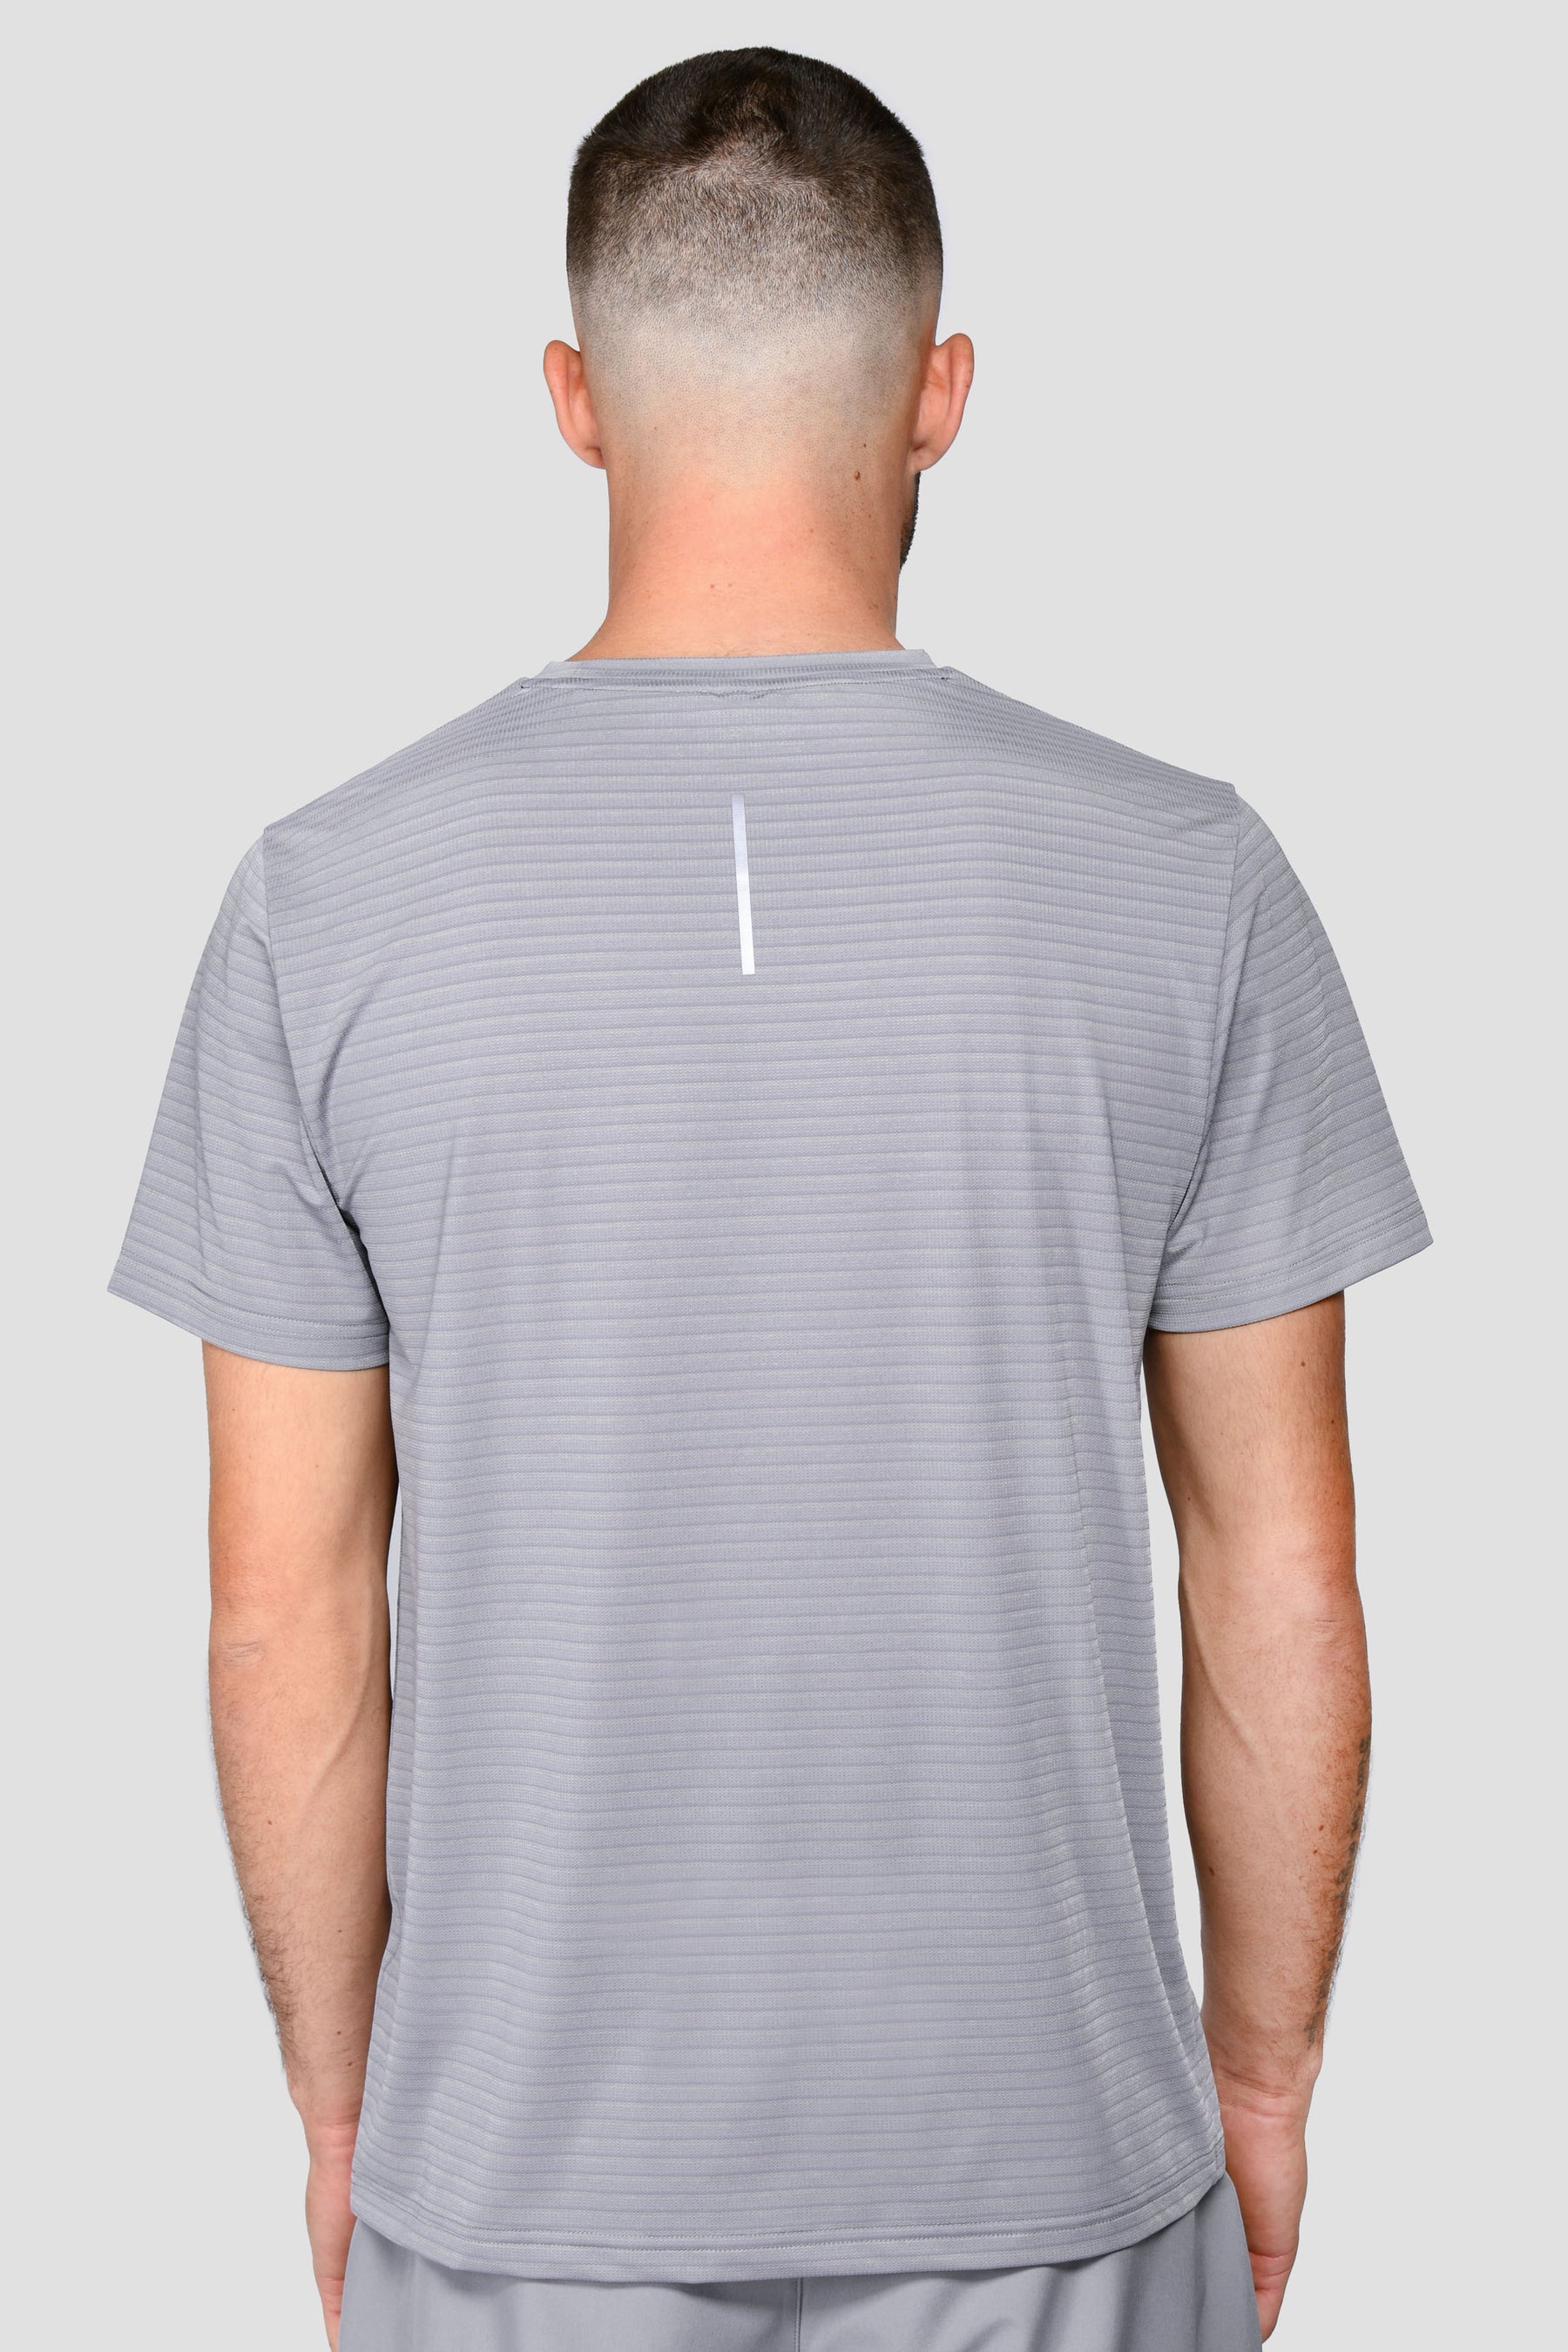 Breeze T-Shirt - Platinum Grey